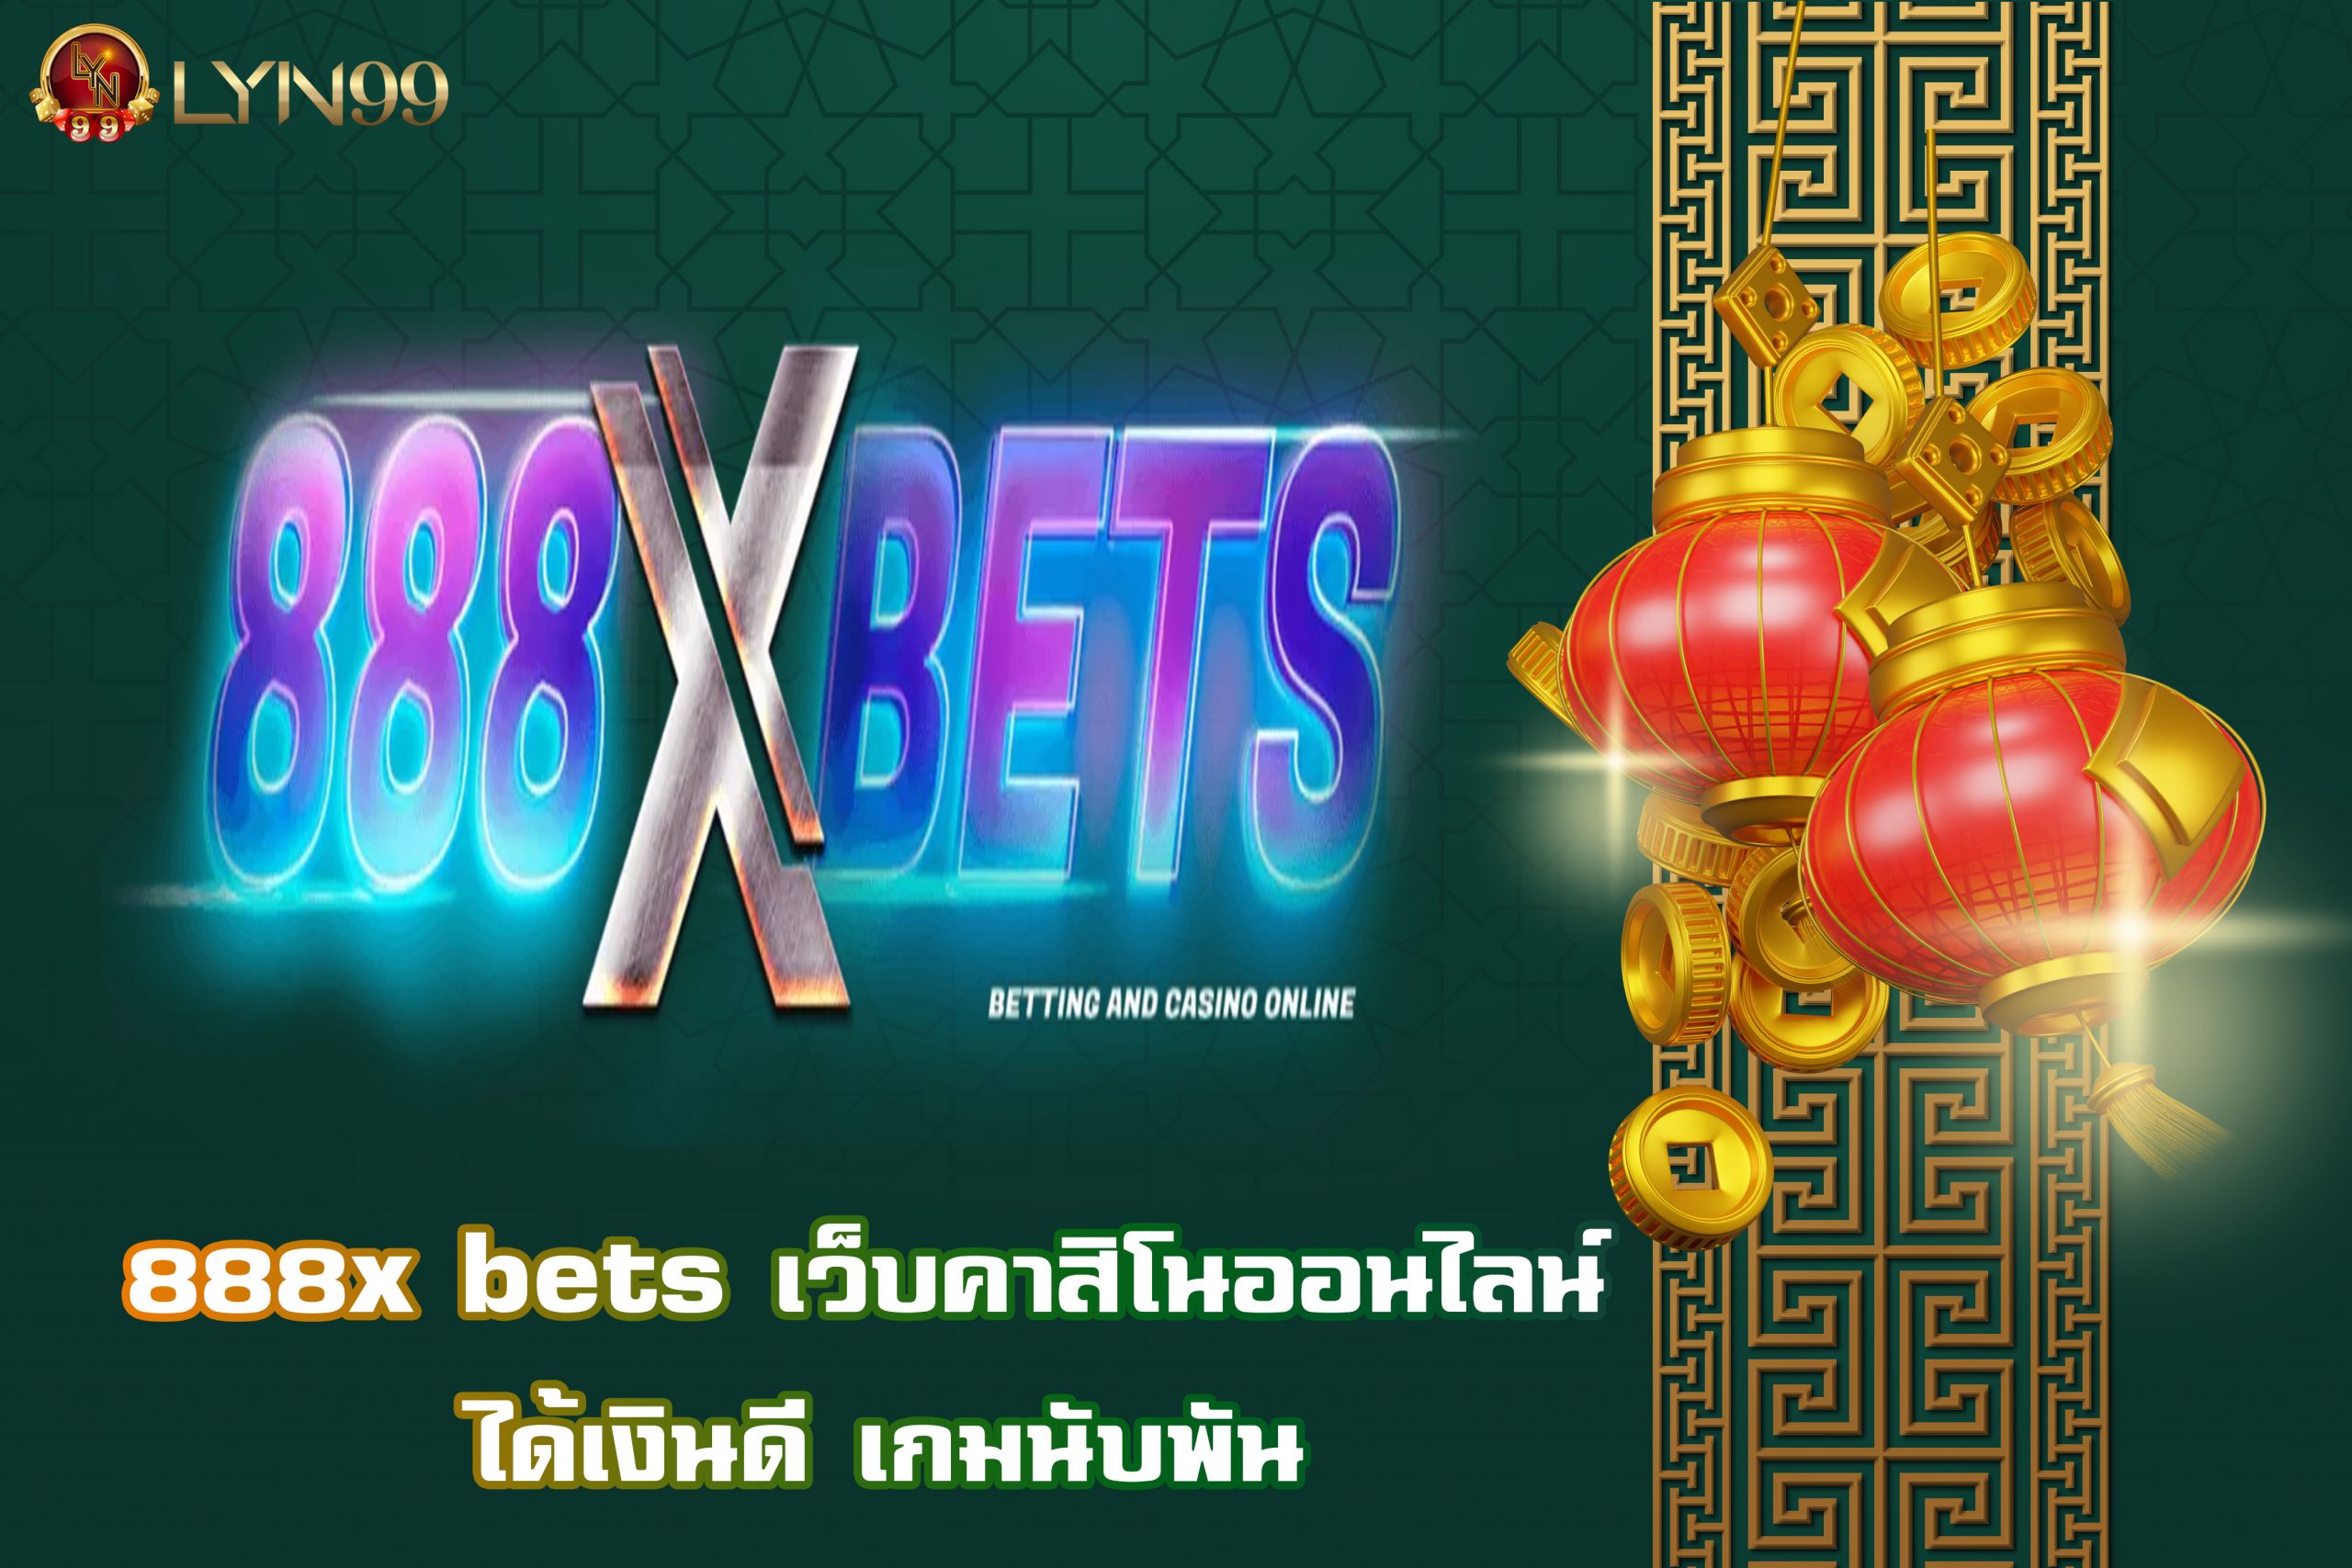 888x bets เว็บคาสิโนออนไลน์ ได้เงินดี เกมนับพัน